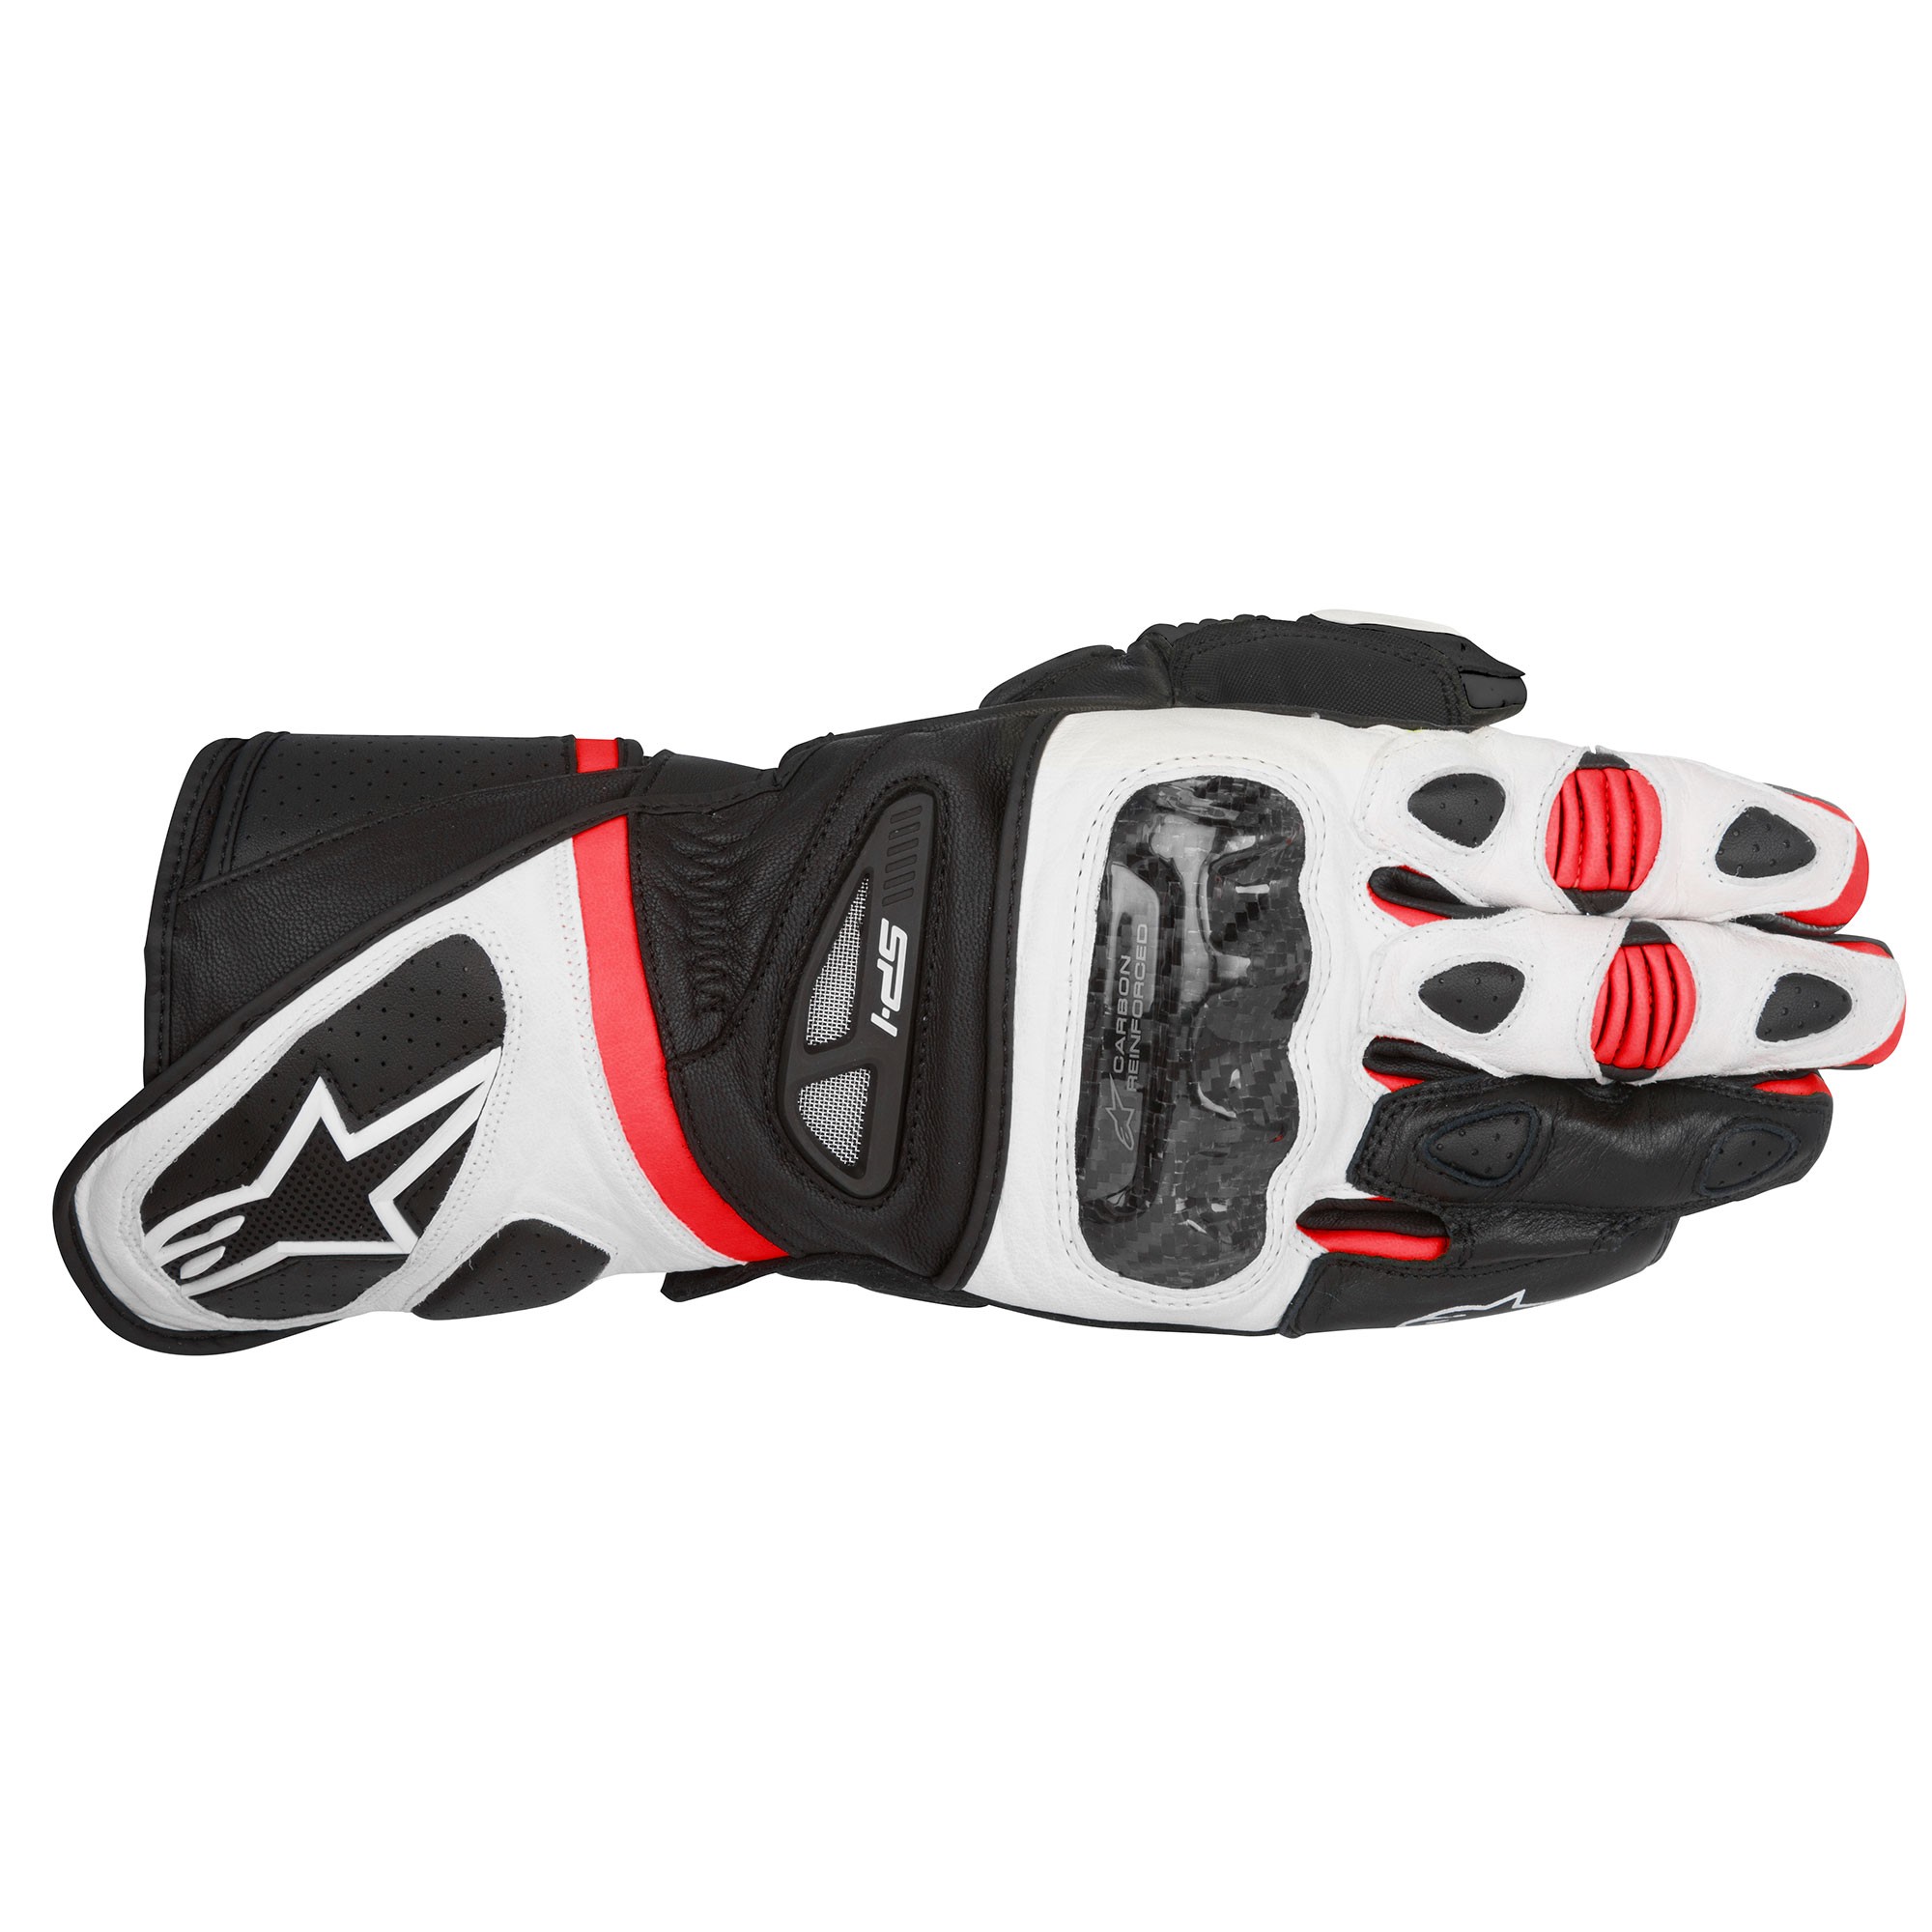 Main image of Alpinestars SP-1 Leather Glove (Blk/Wht/Rd)